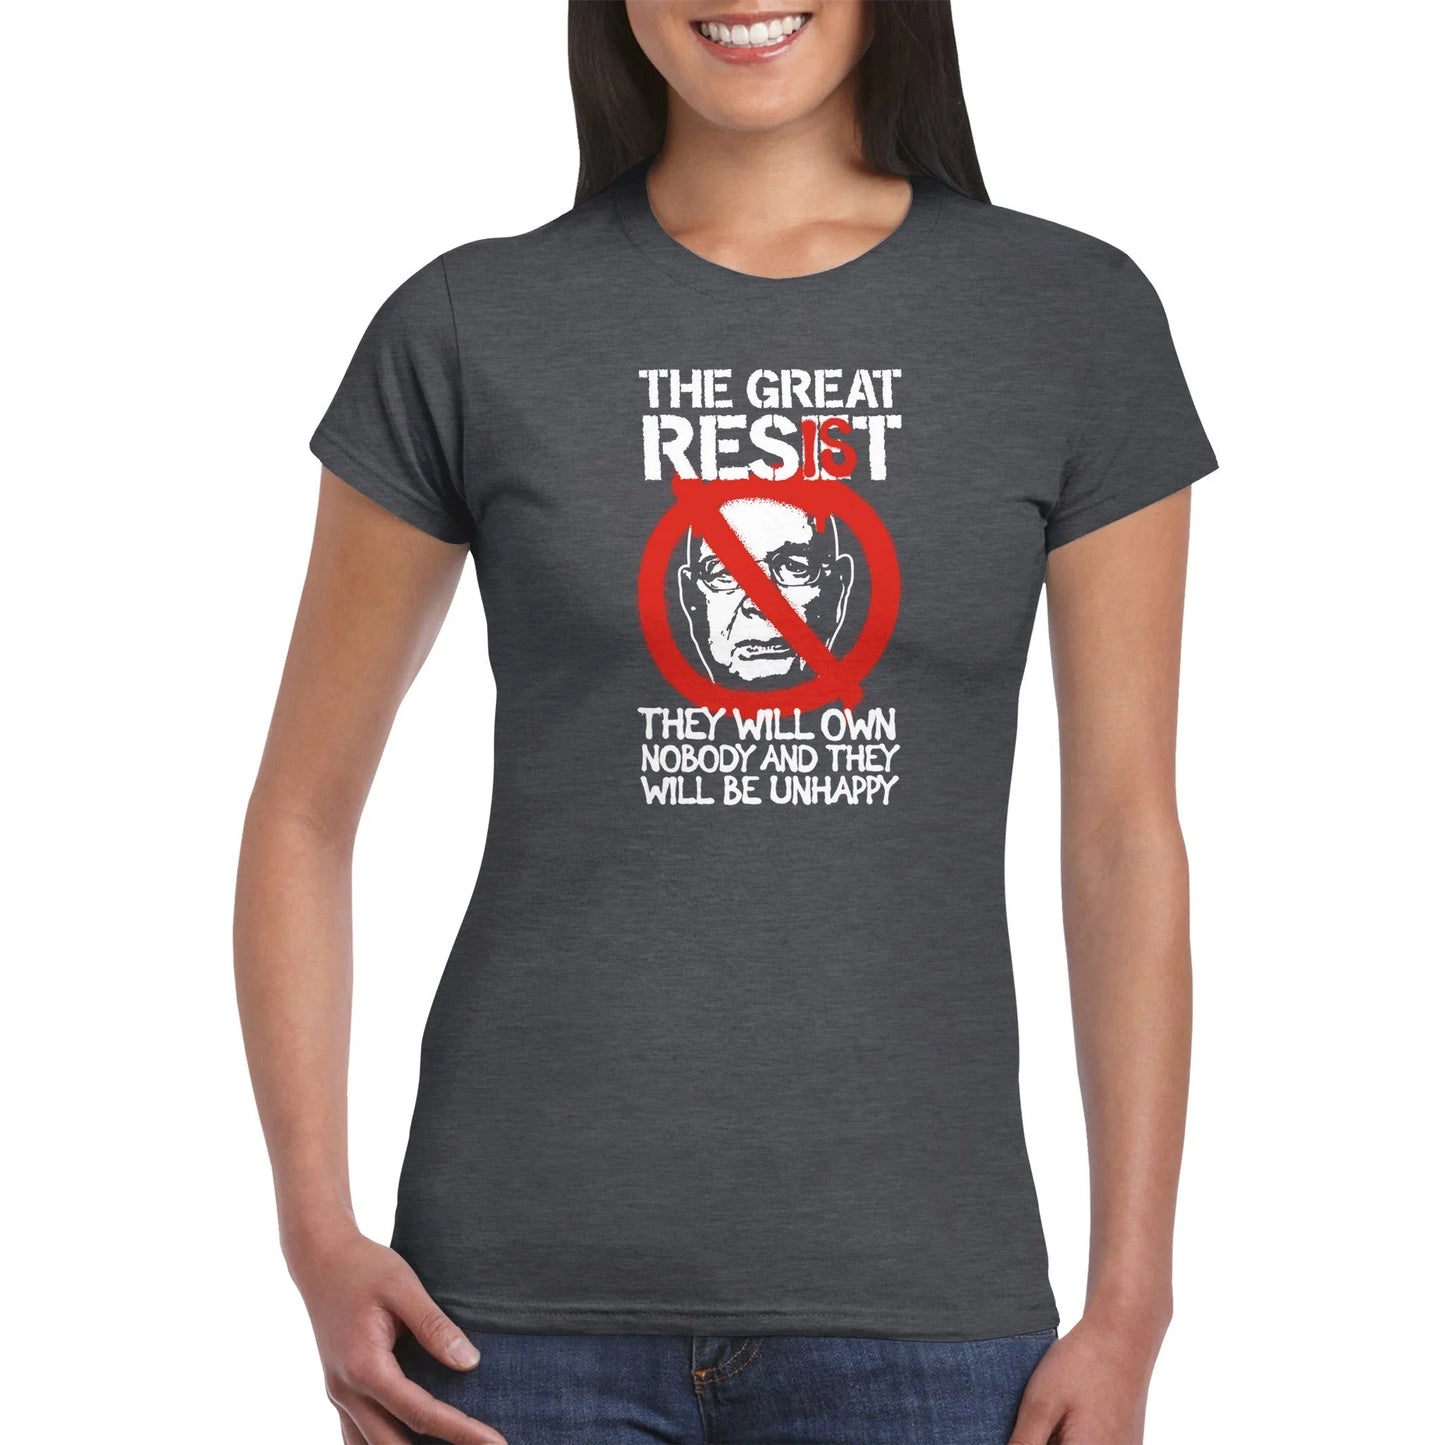 The Great Resist Women's T-Shirt